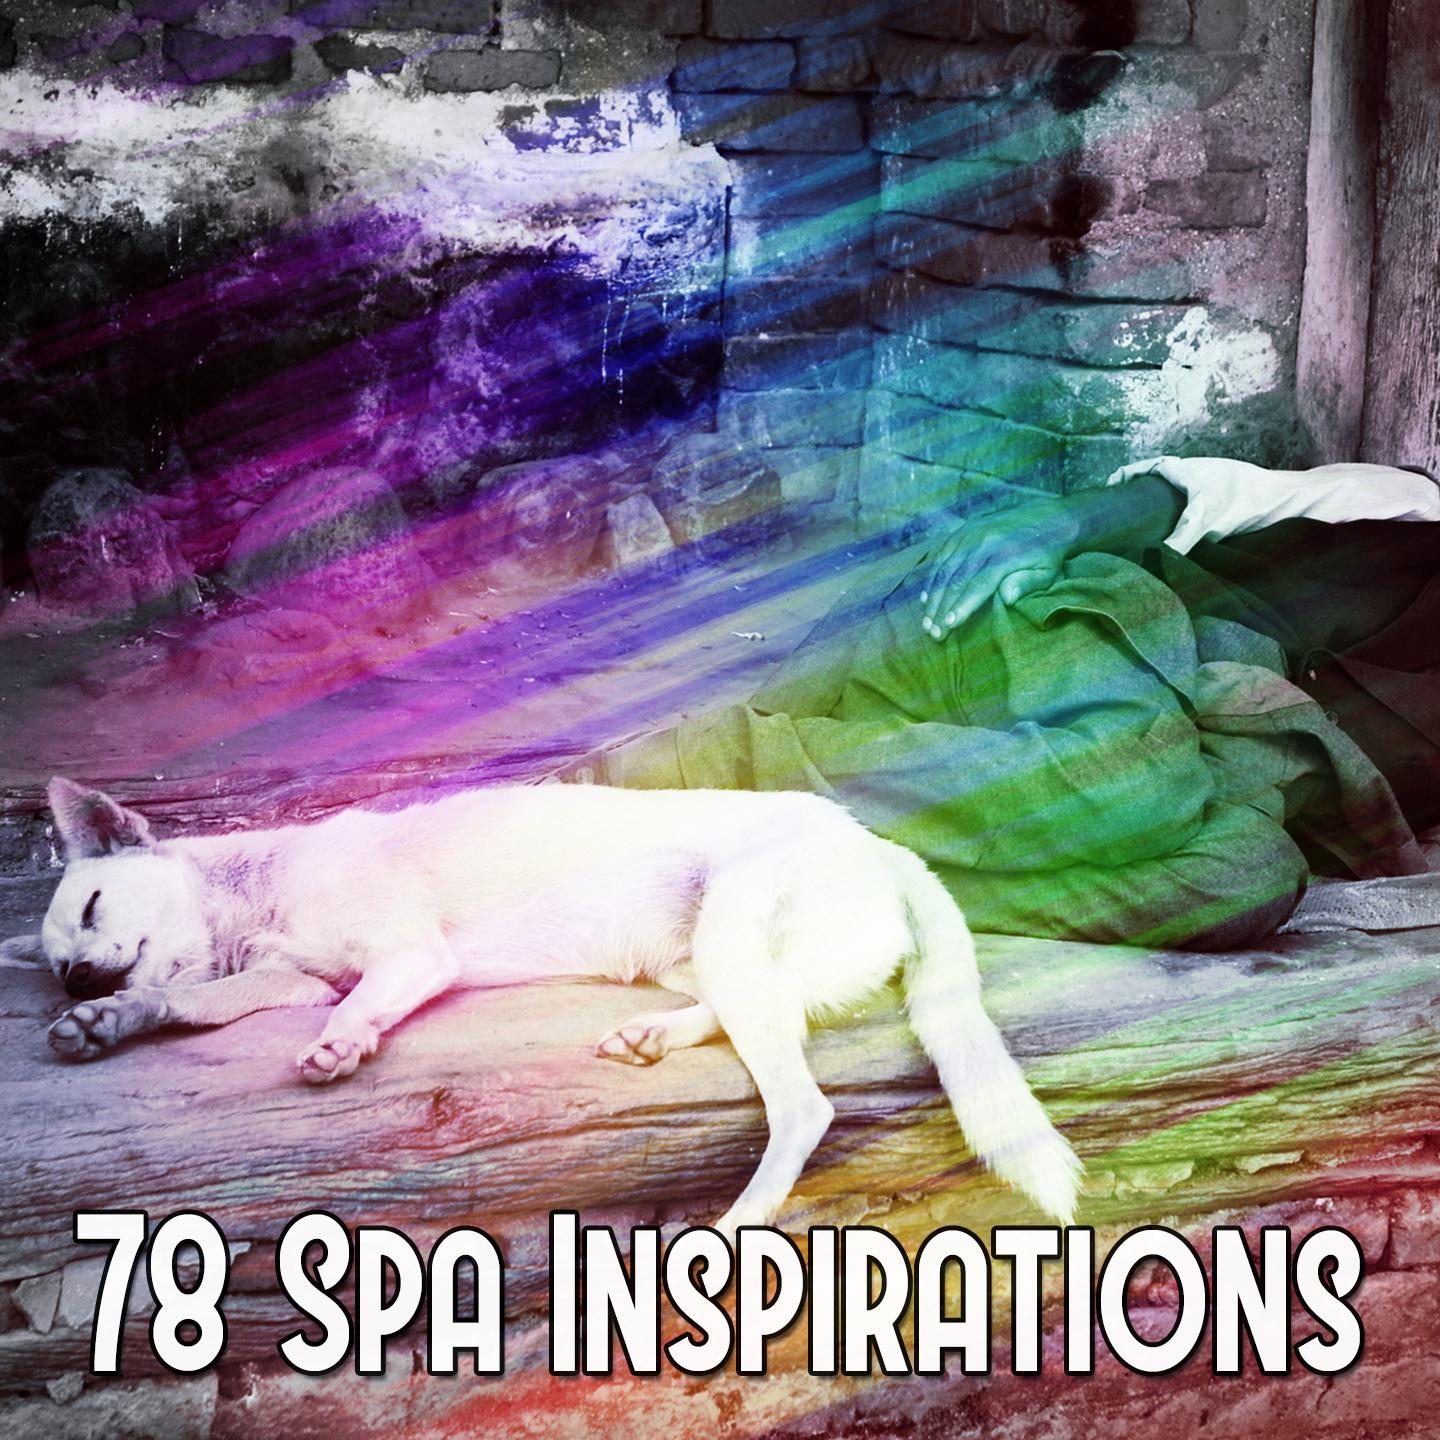 78 Spa Inspirations